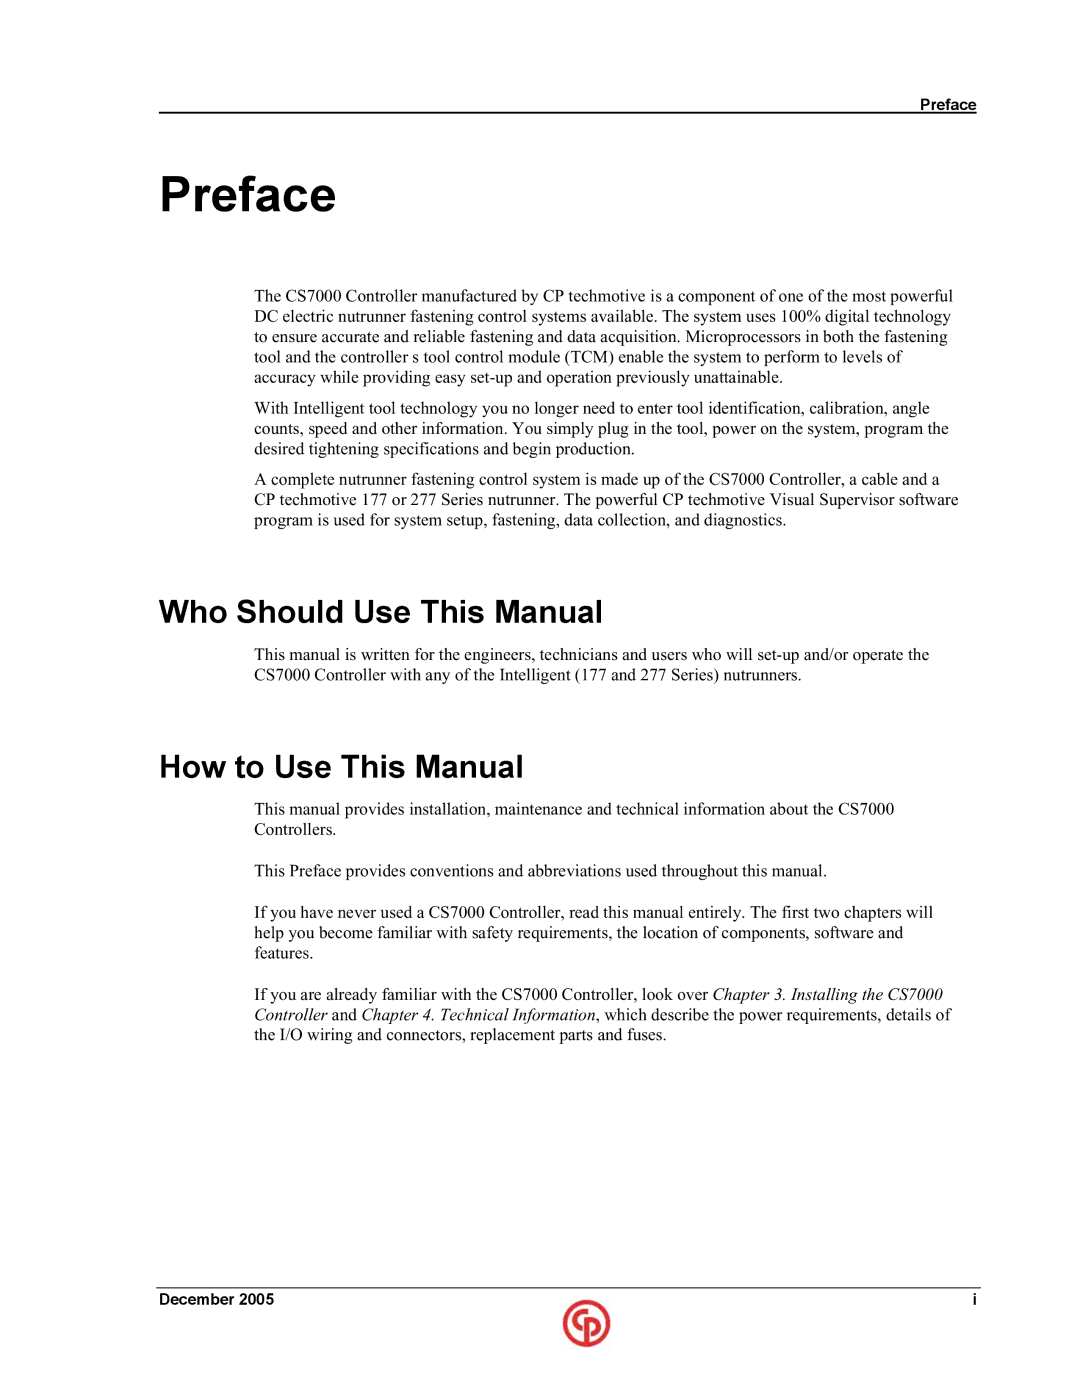 Chicago Pneumatic CS7000 manual Preface, Who Should Use This Manual, How to Use This Manual 